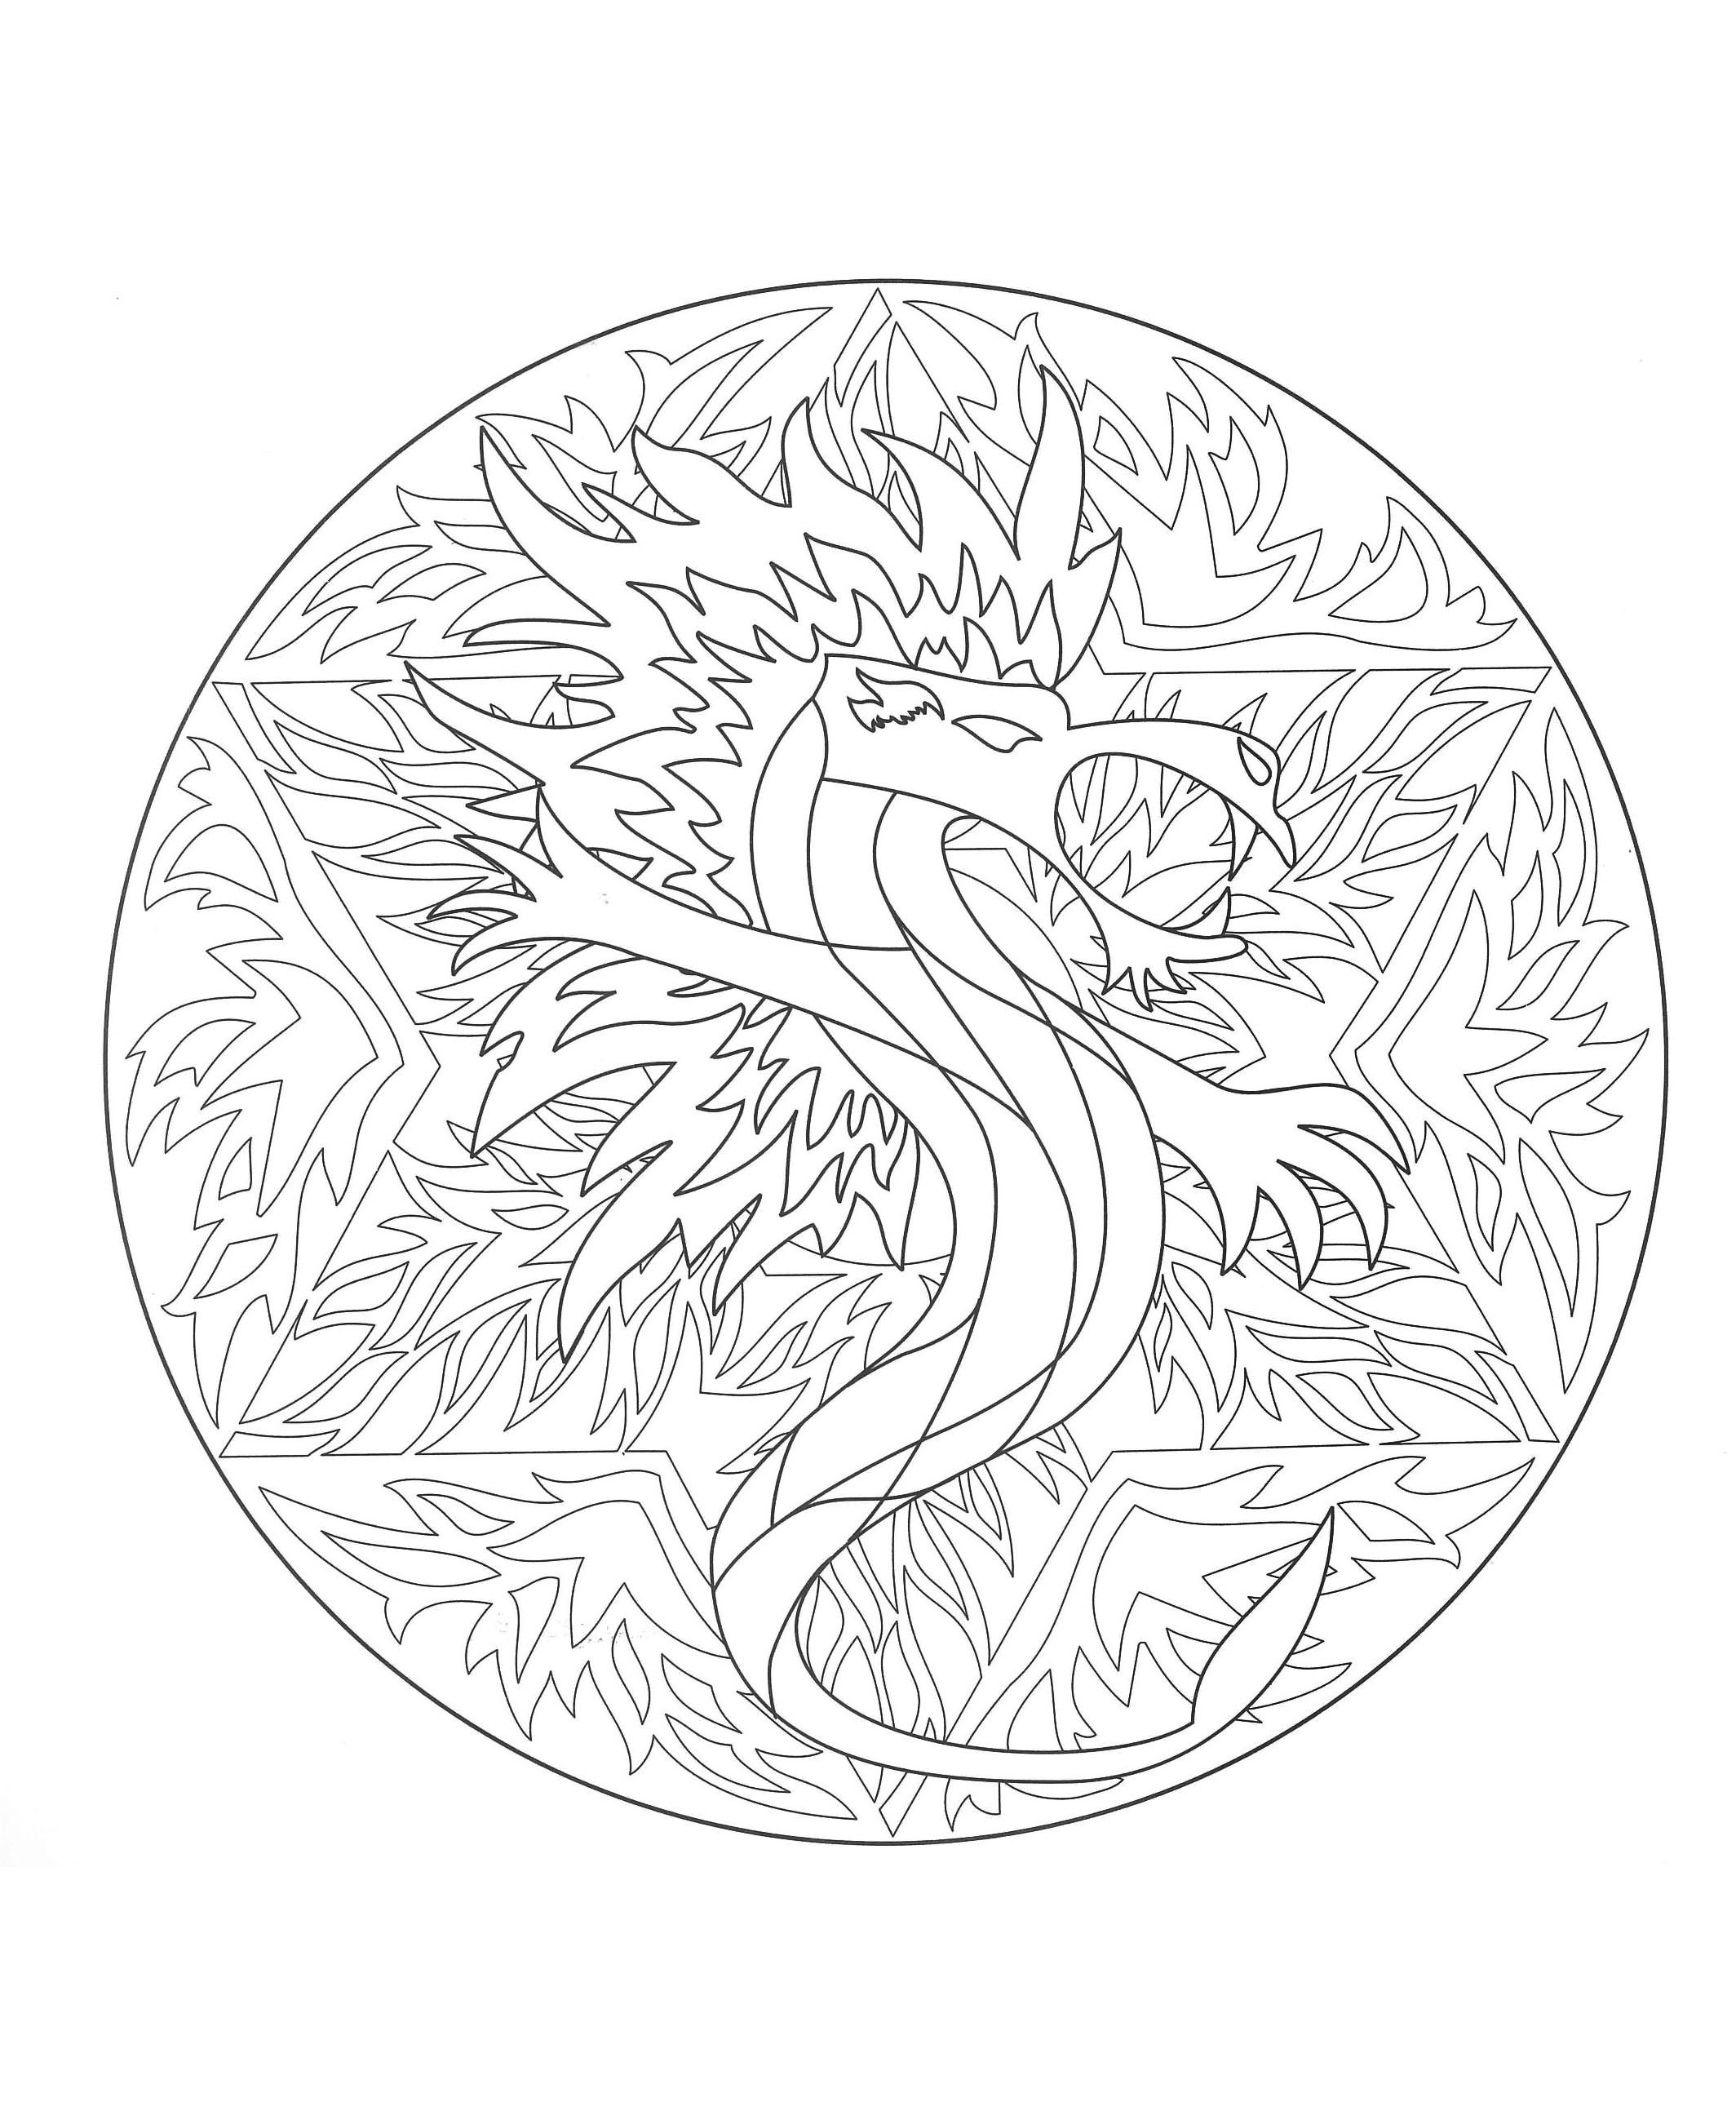 Mandala dragon - 5 - Mandalas Adult Coloring Pages